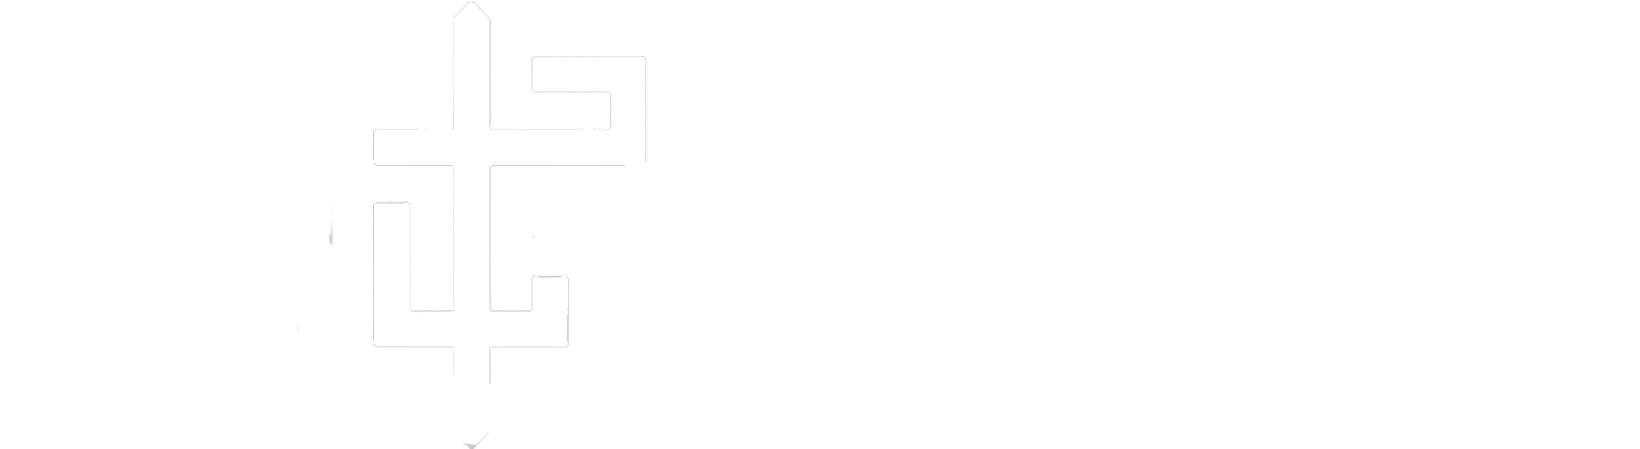 learn-trade